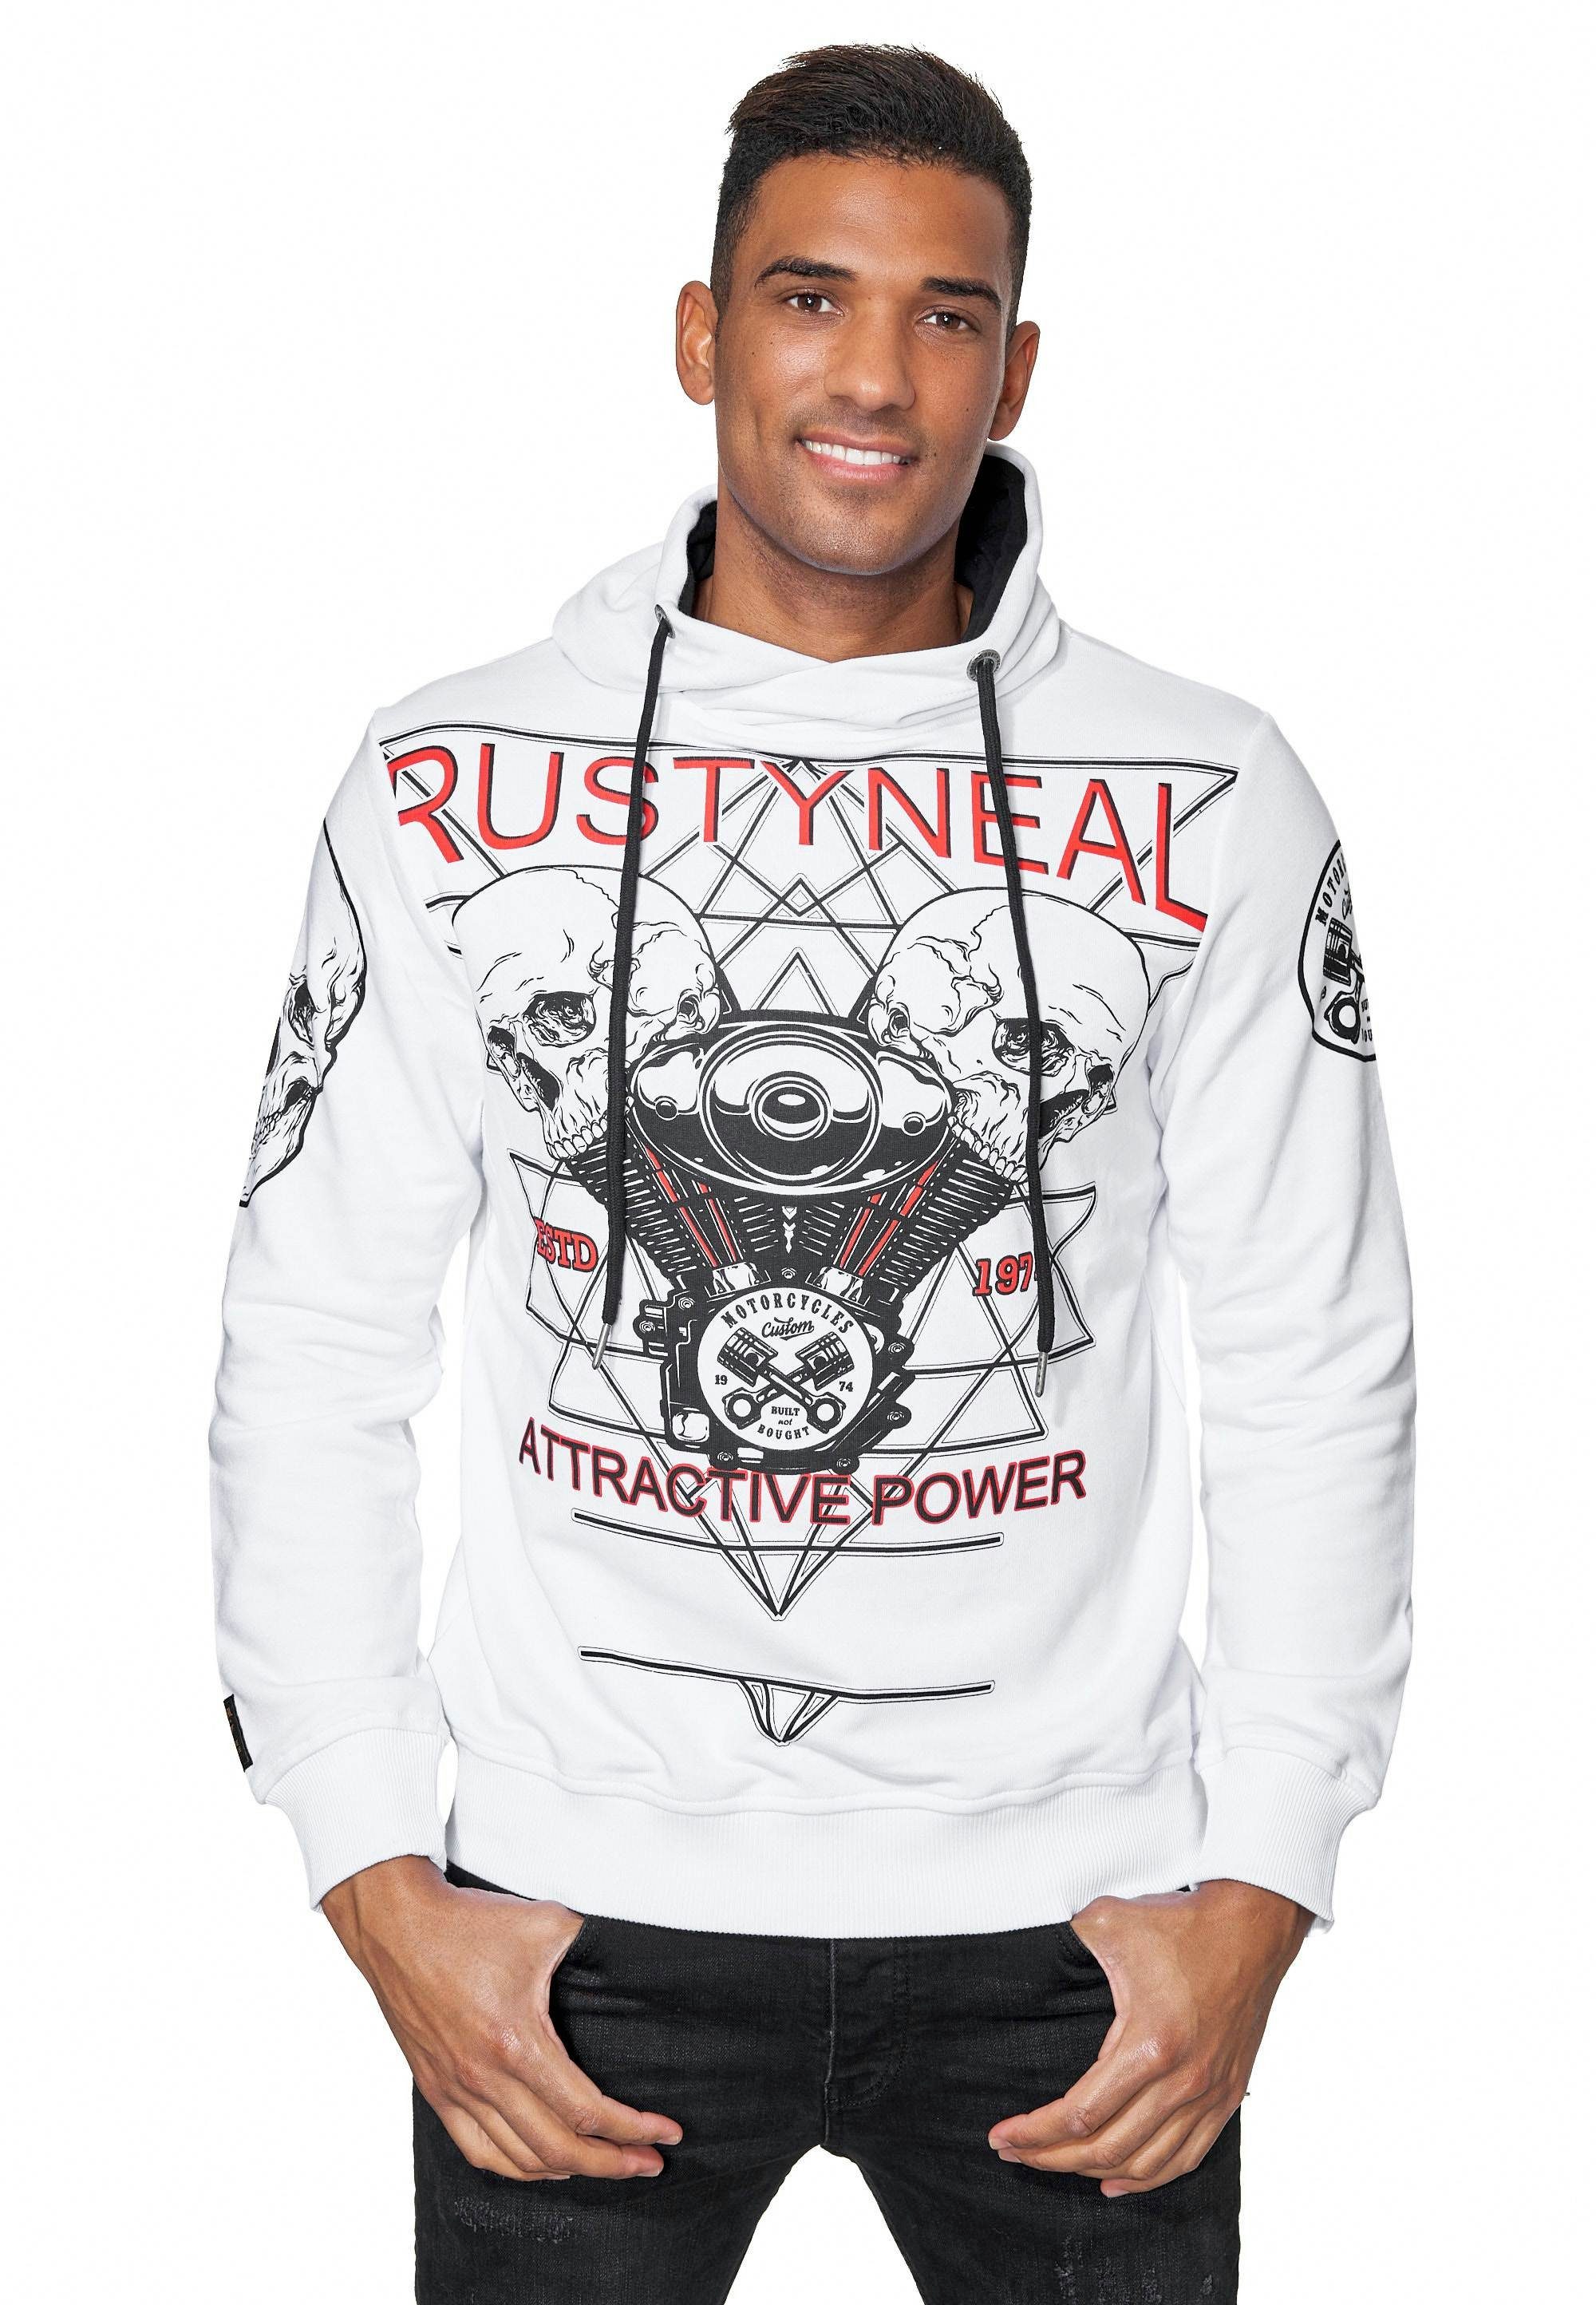 Neal rockigem Rusty Neal Sweater mit Print Kapuzensweatshirt weiß Rusty